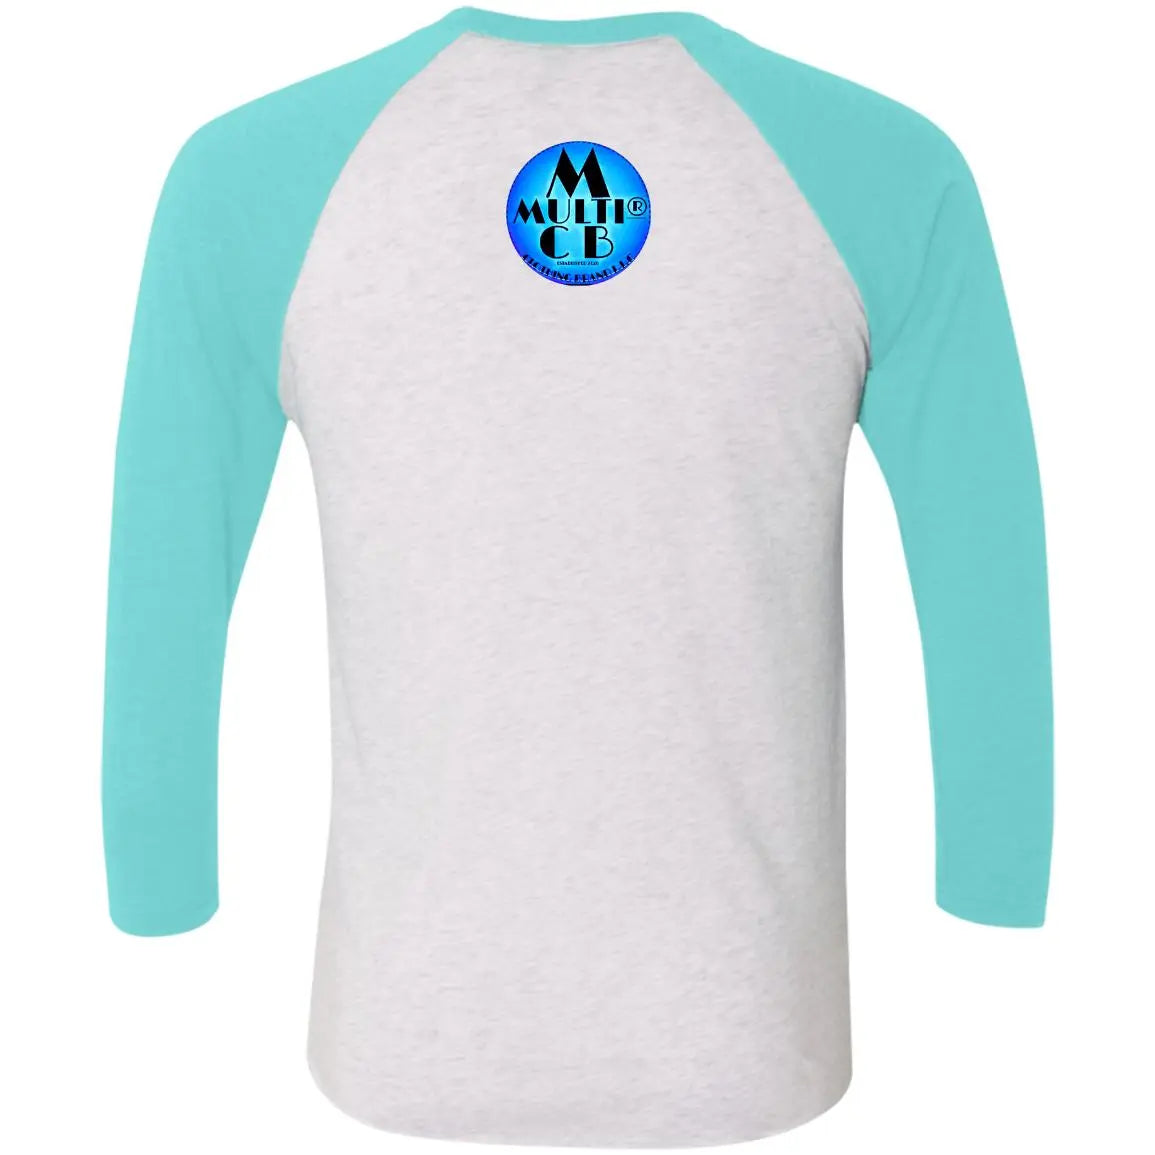 Be Your Own Motivation - Men's Tri-Blend 3/4 Sleeve Raglan T-Shirt CustomCat